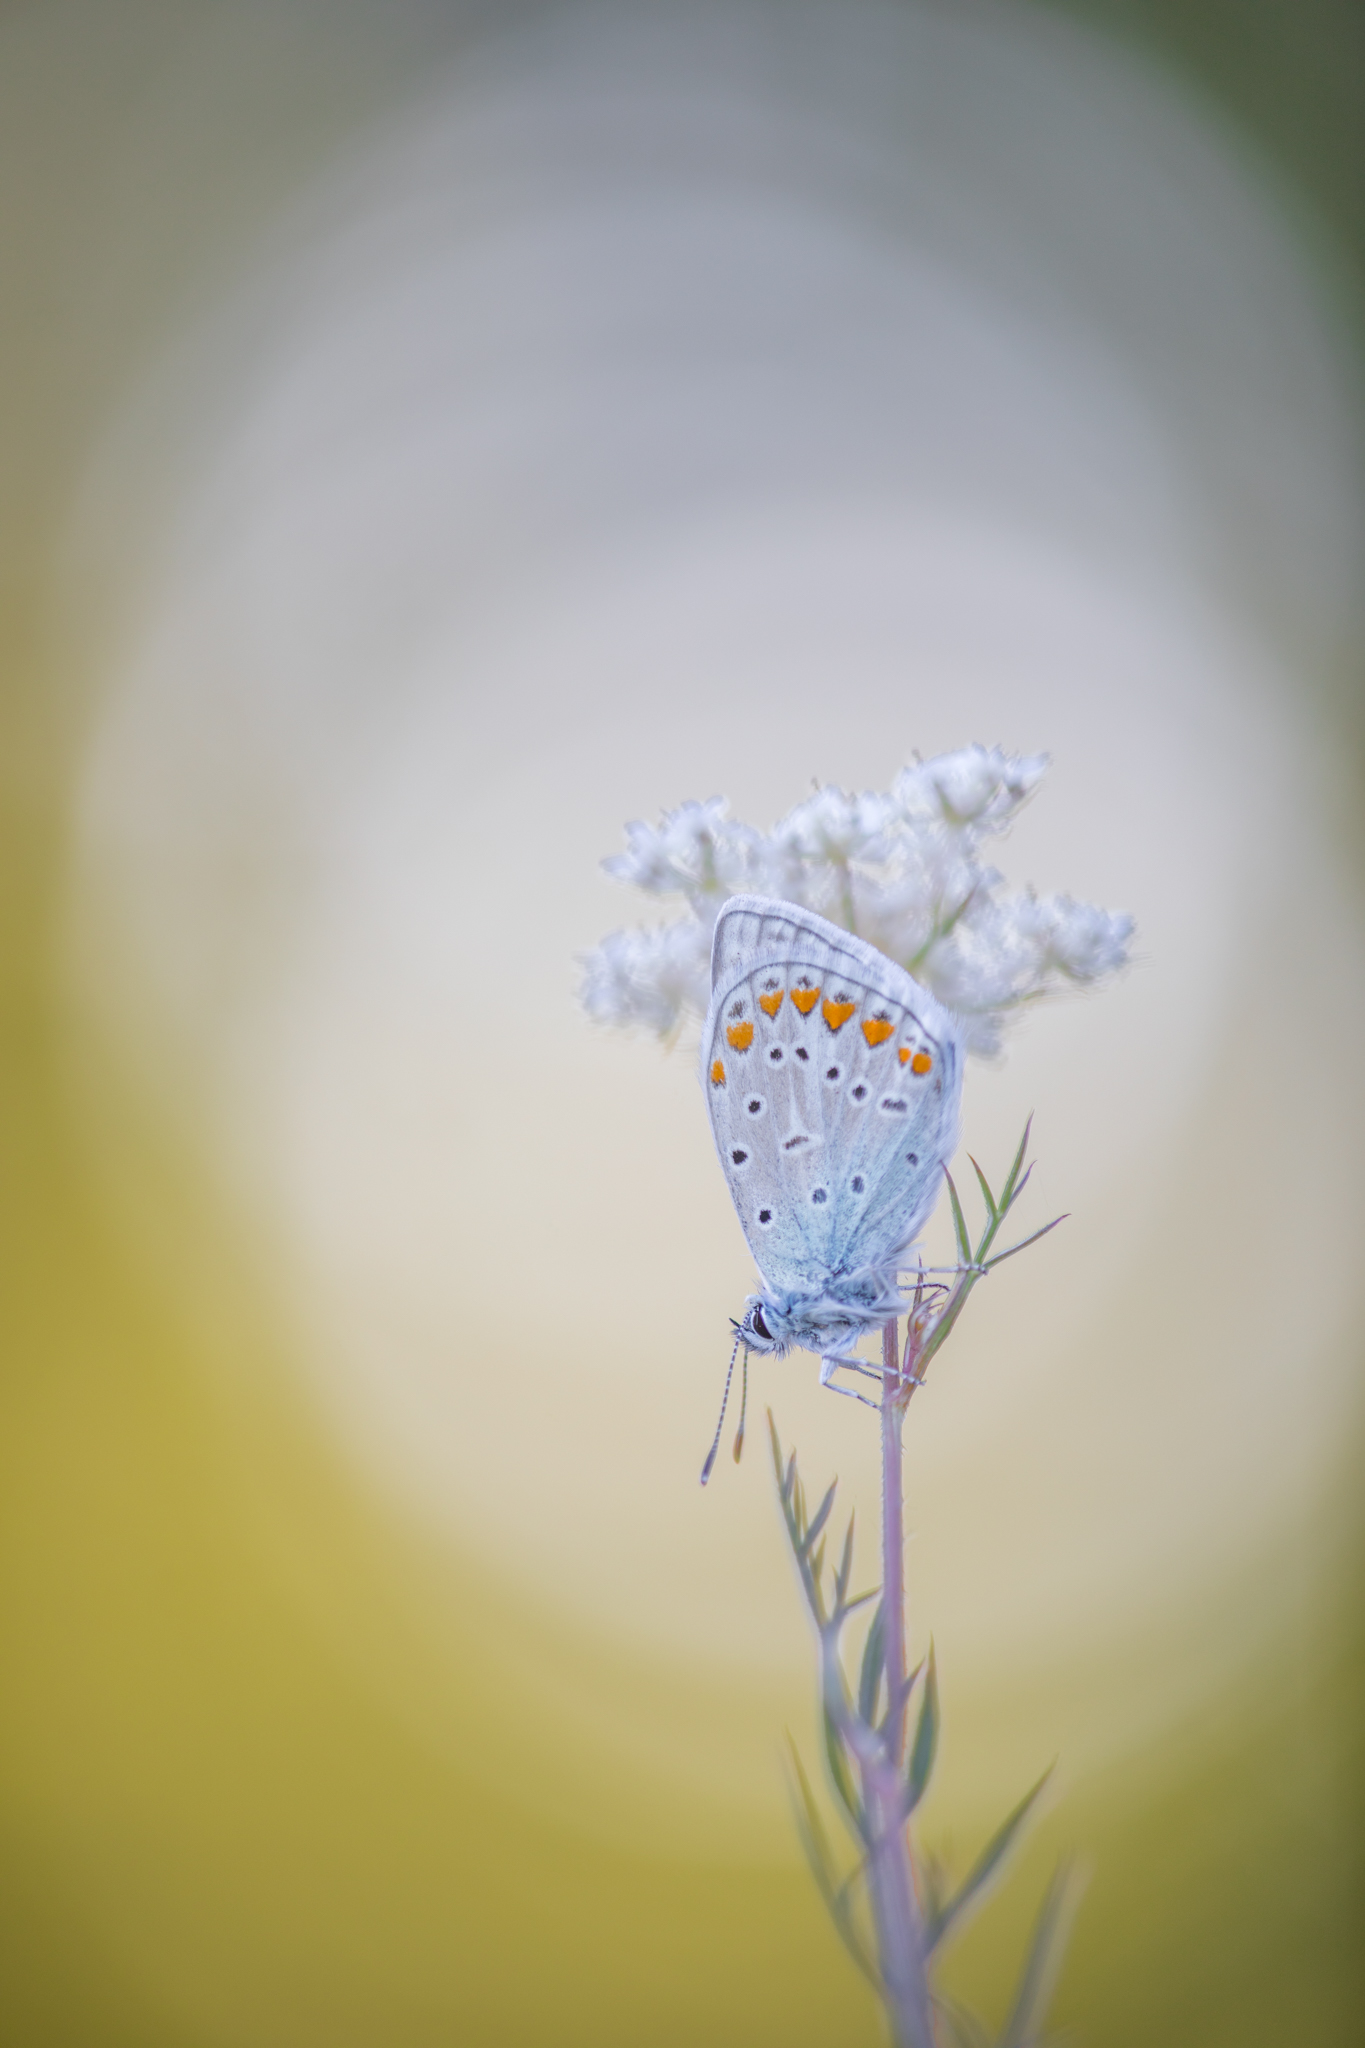 Icarusblauwtje, vlinders in de viroinval, workshop vlinders, workkshop vlinders fotograferen juni 2021